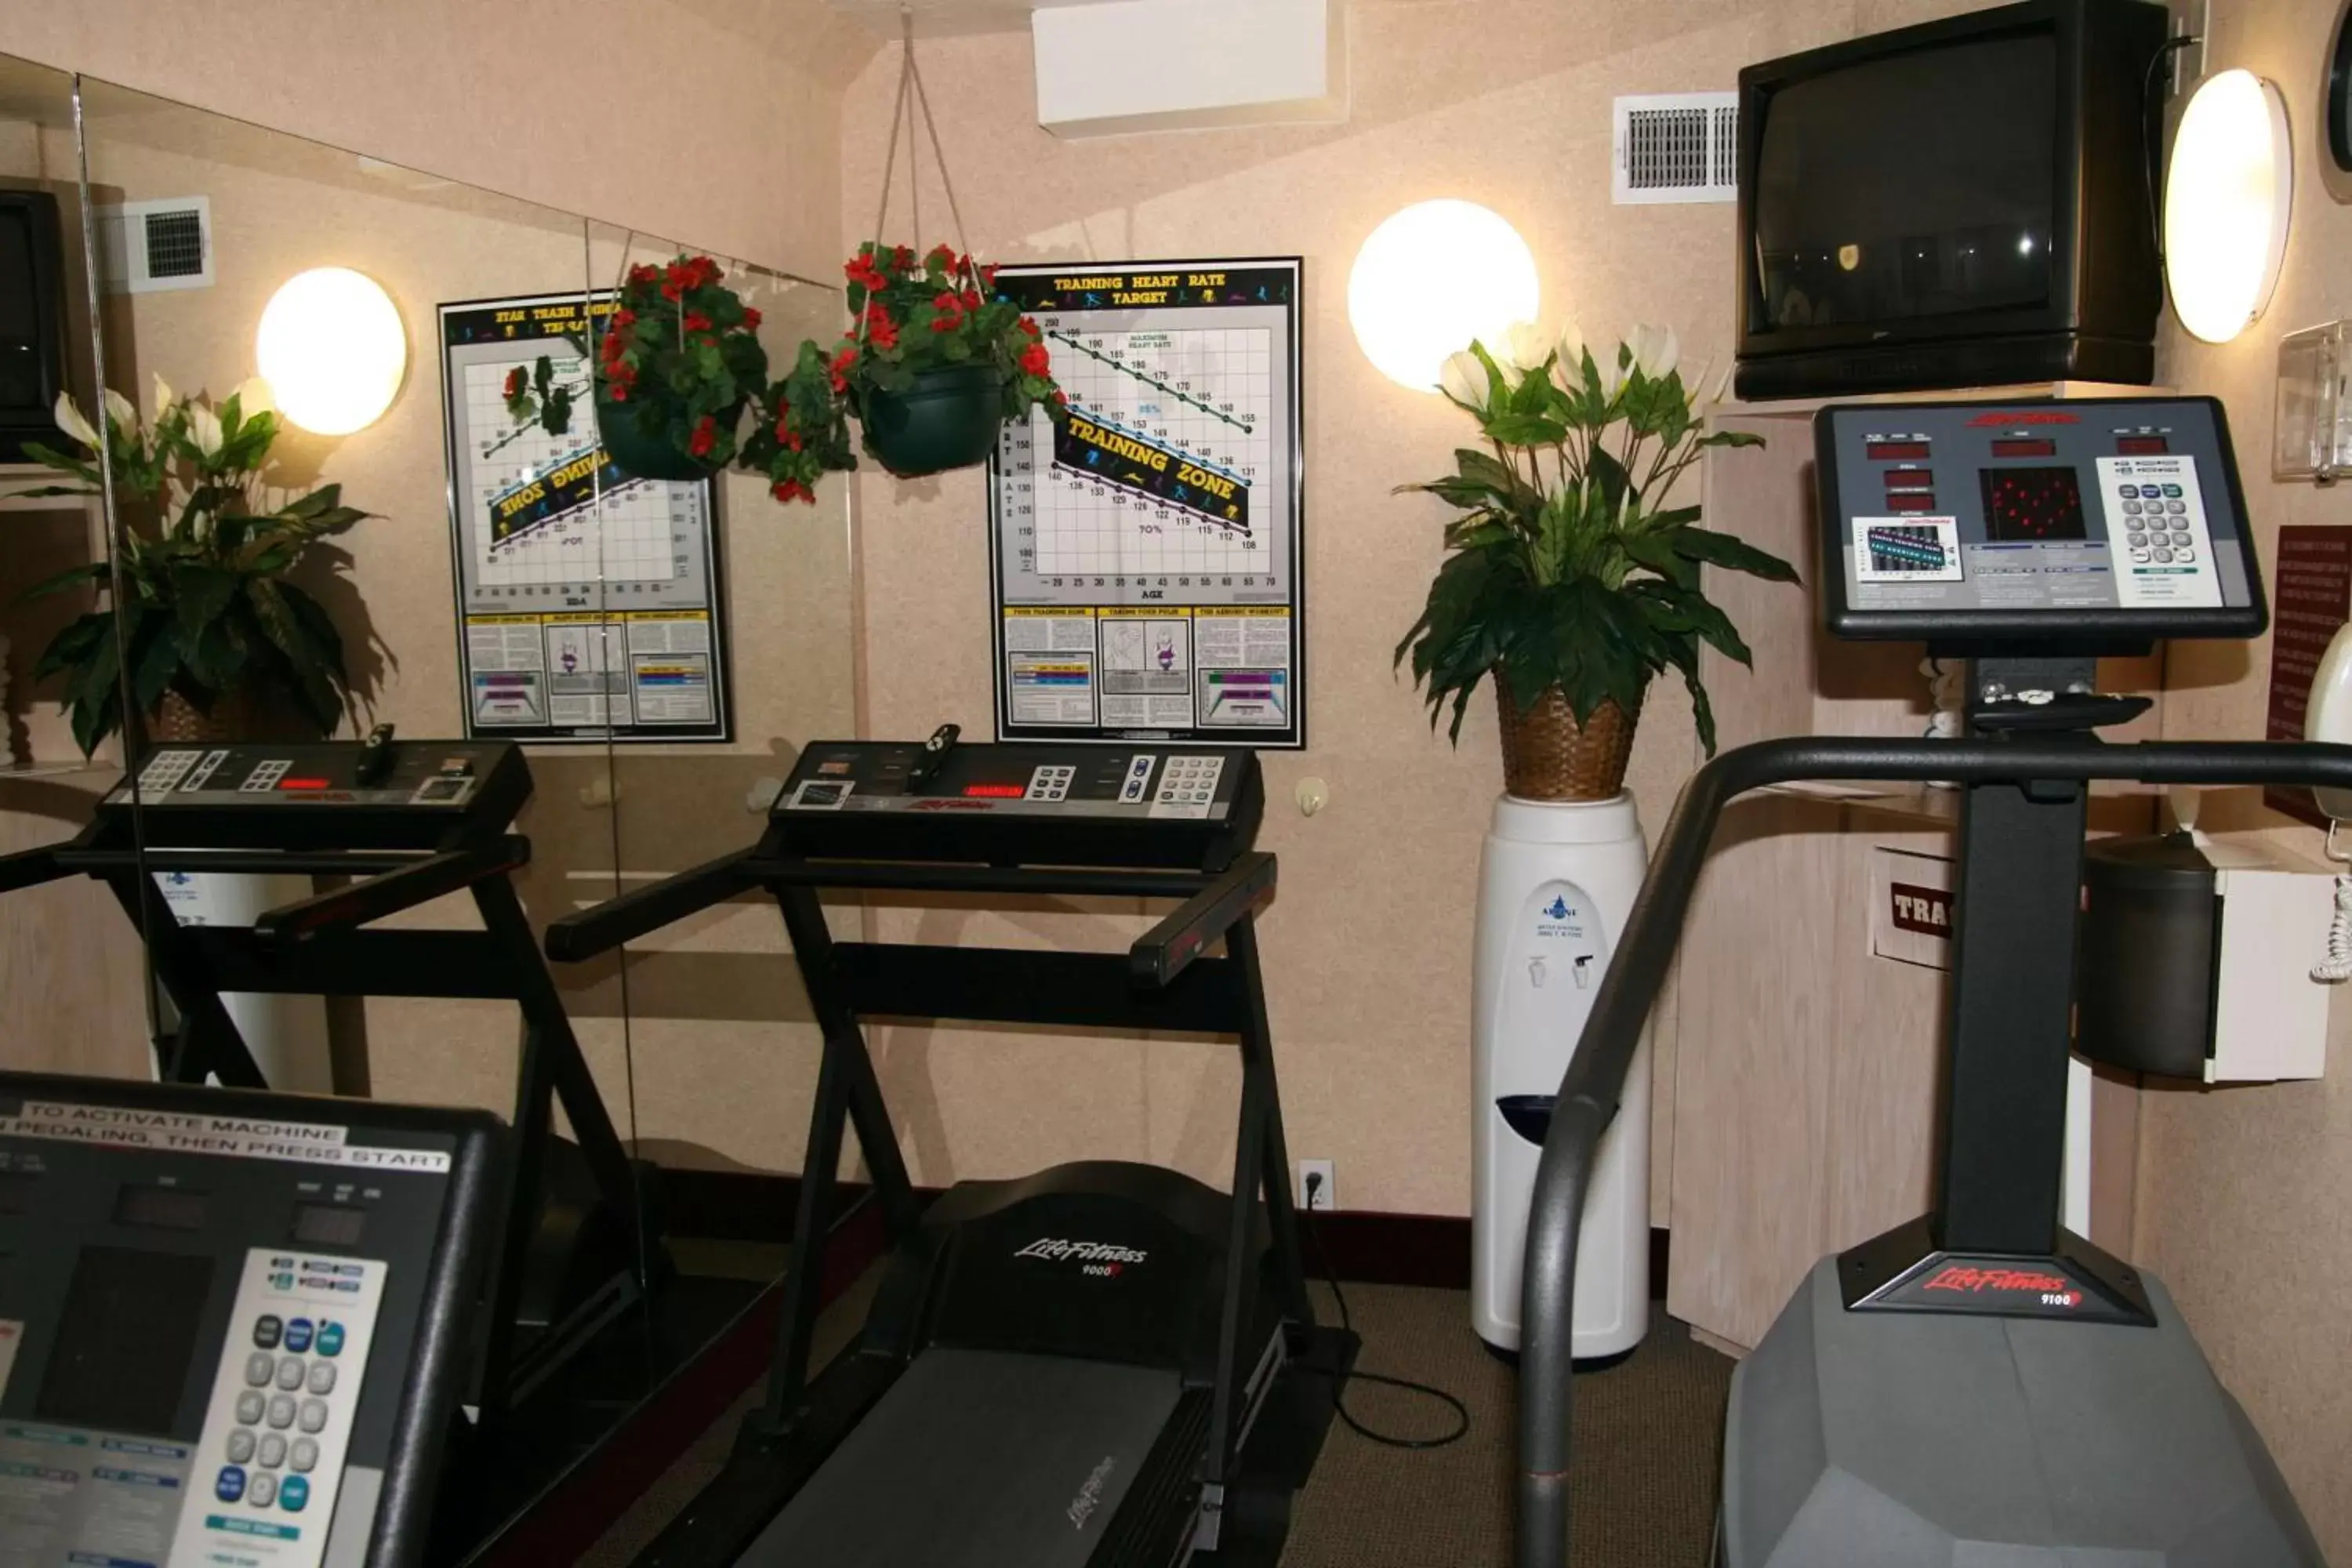 Fitness centre/facilities, Fitness Center/Facilities in Hampton Inn Glendale-Peoria